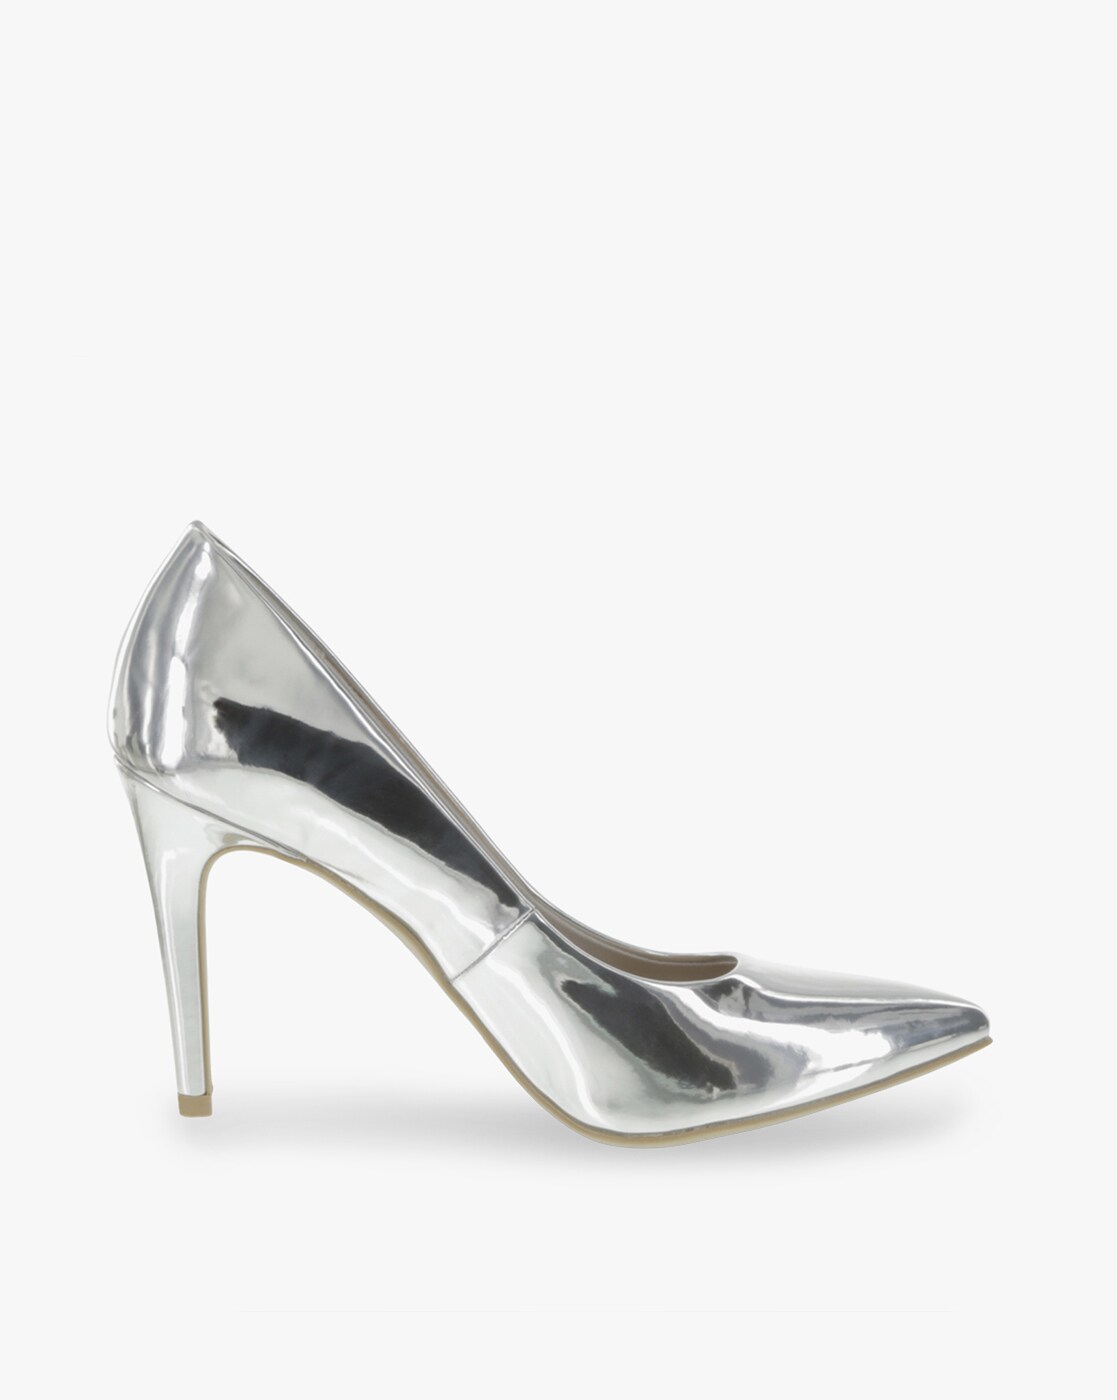 Buy > brash shoes heels > in stock